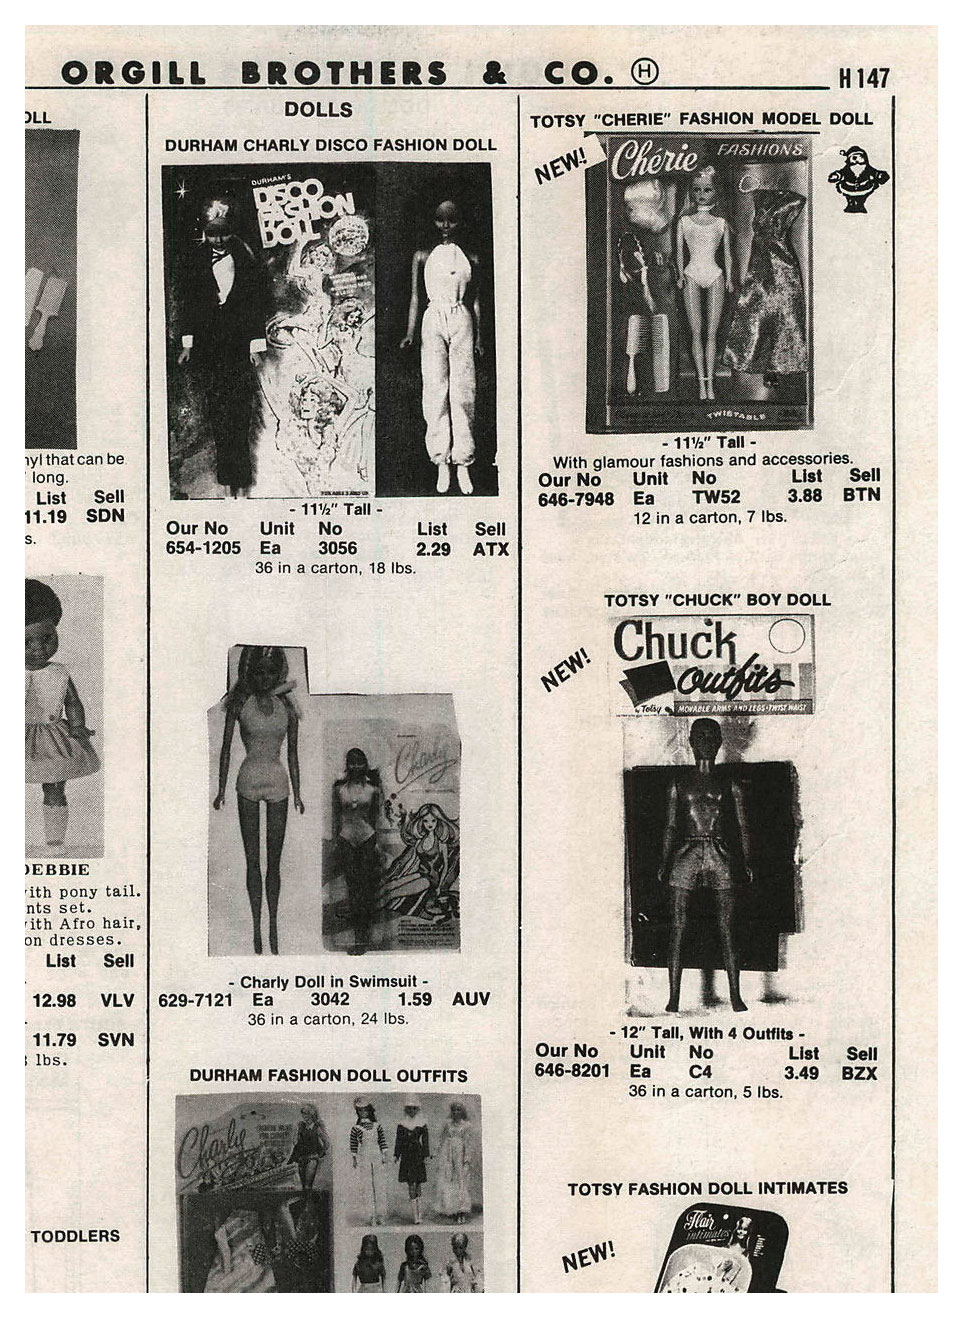 From 1980 Orgill catalogue